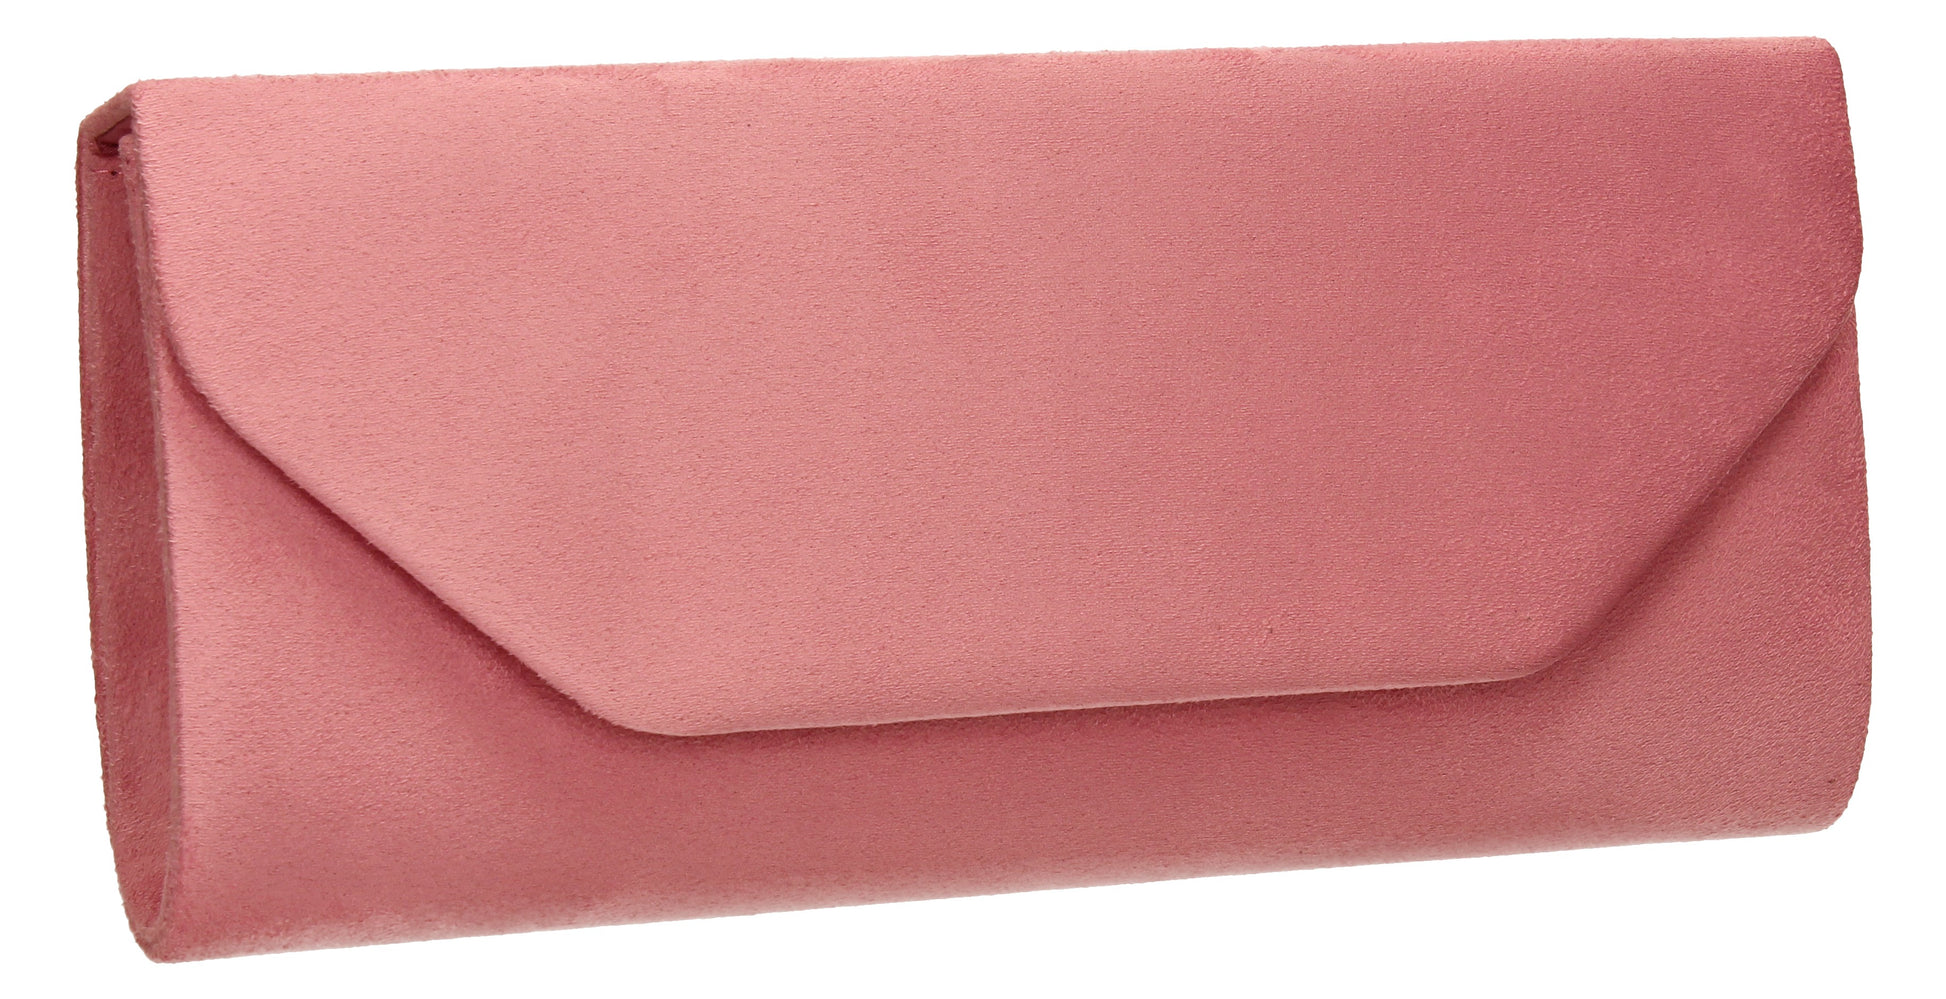 SWANKYSWANS Isabella Velvet Clutch Bag Light Pink Cute Cheap Clutch Bag For Weddings School and Work